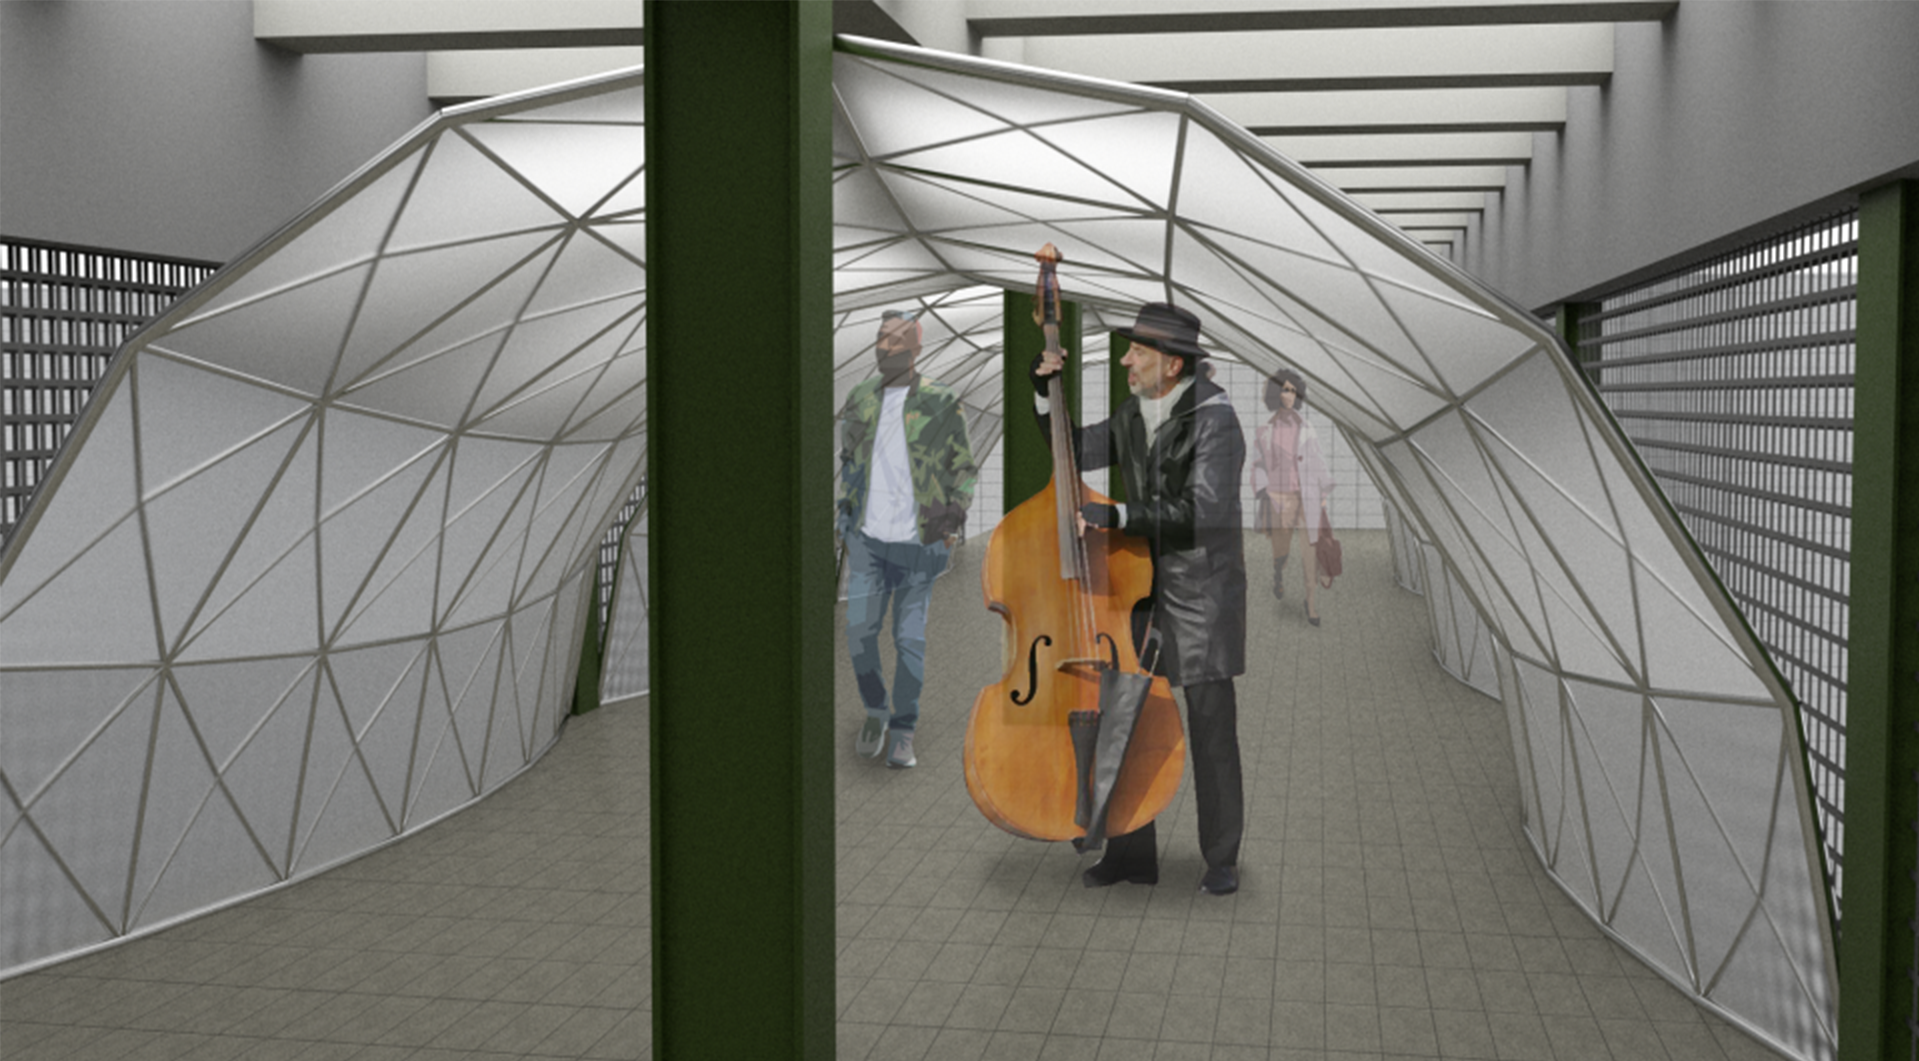 Acoustic Environment Modification of the Subway Corridor